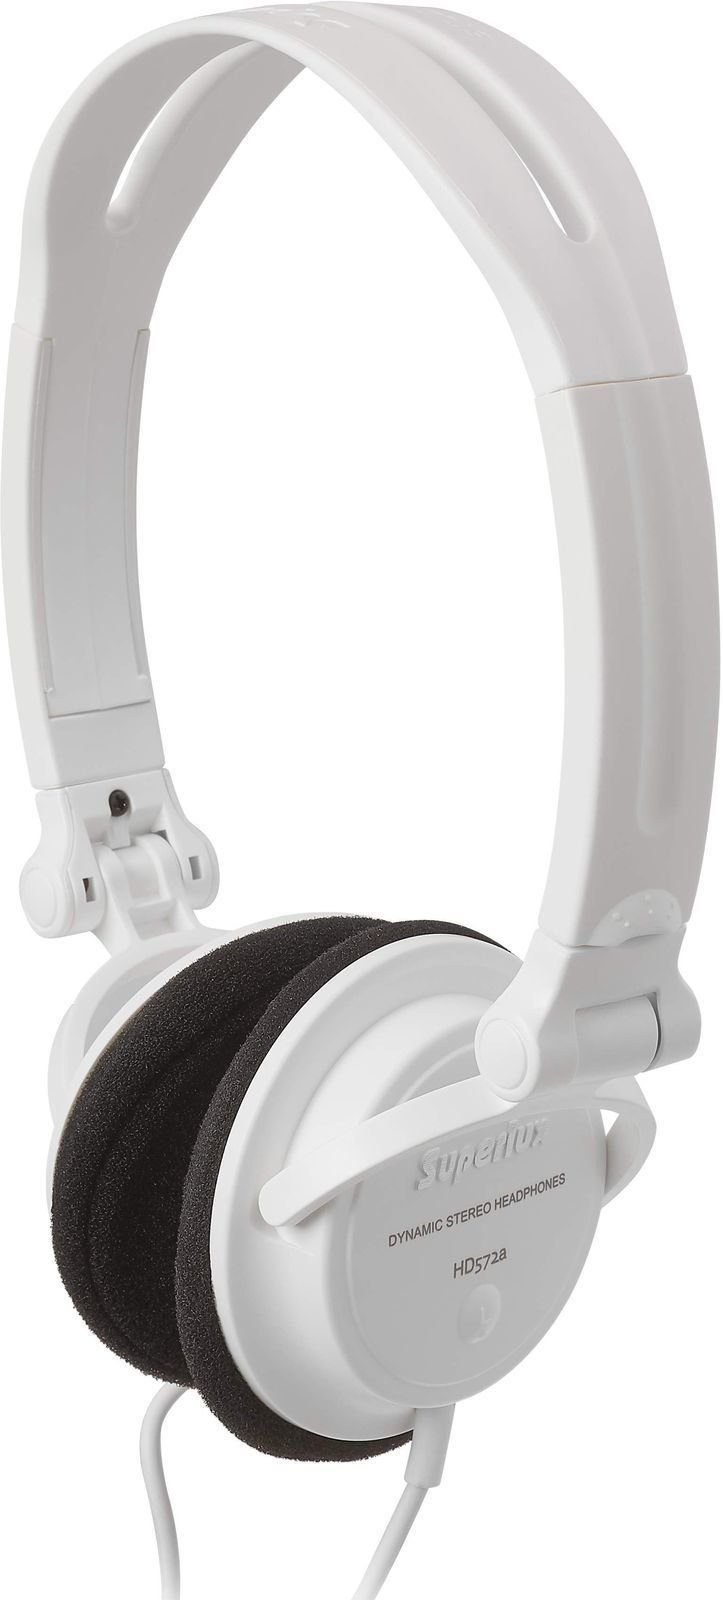 On-ear Headphones Superlux HD572A White